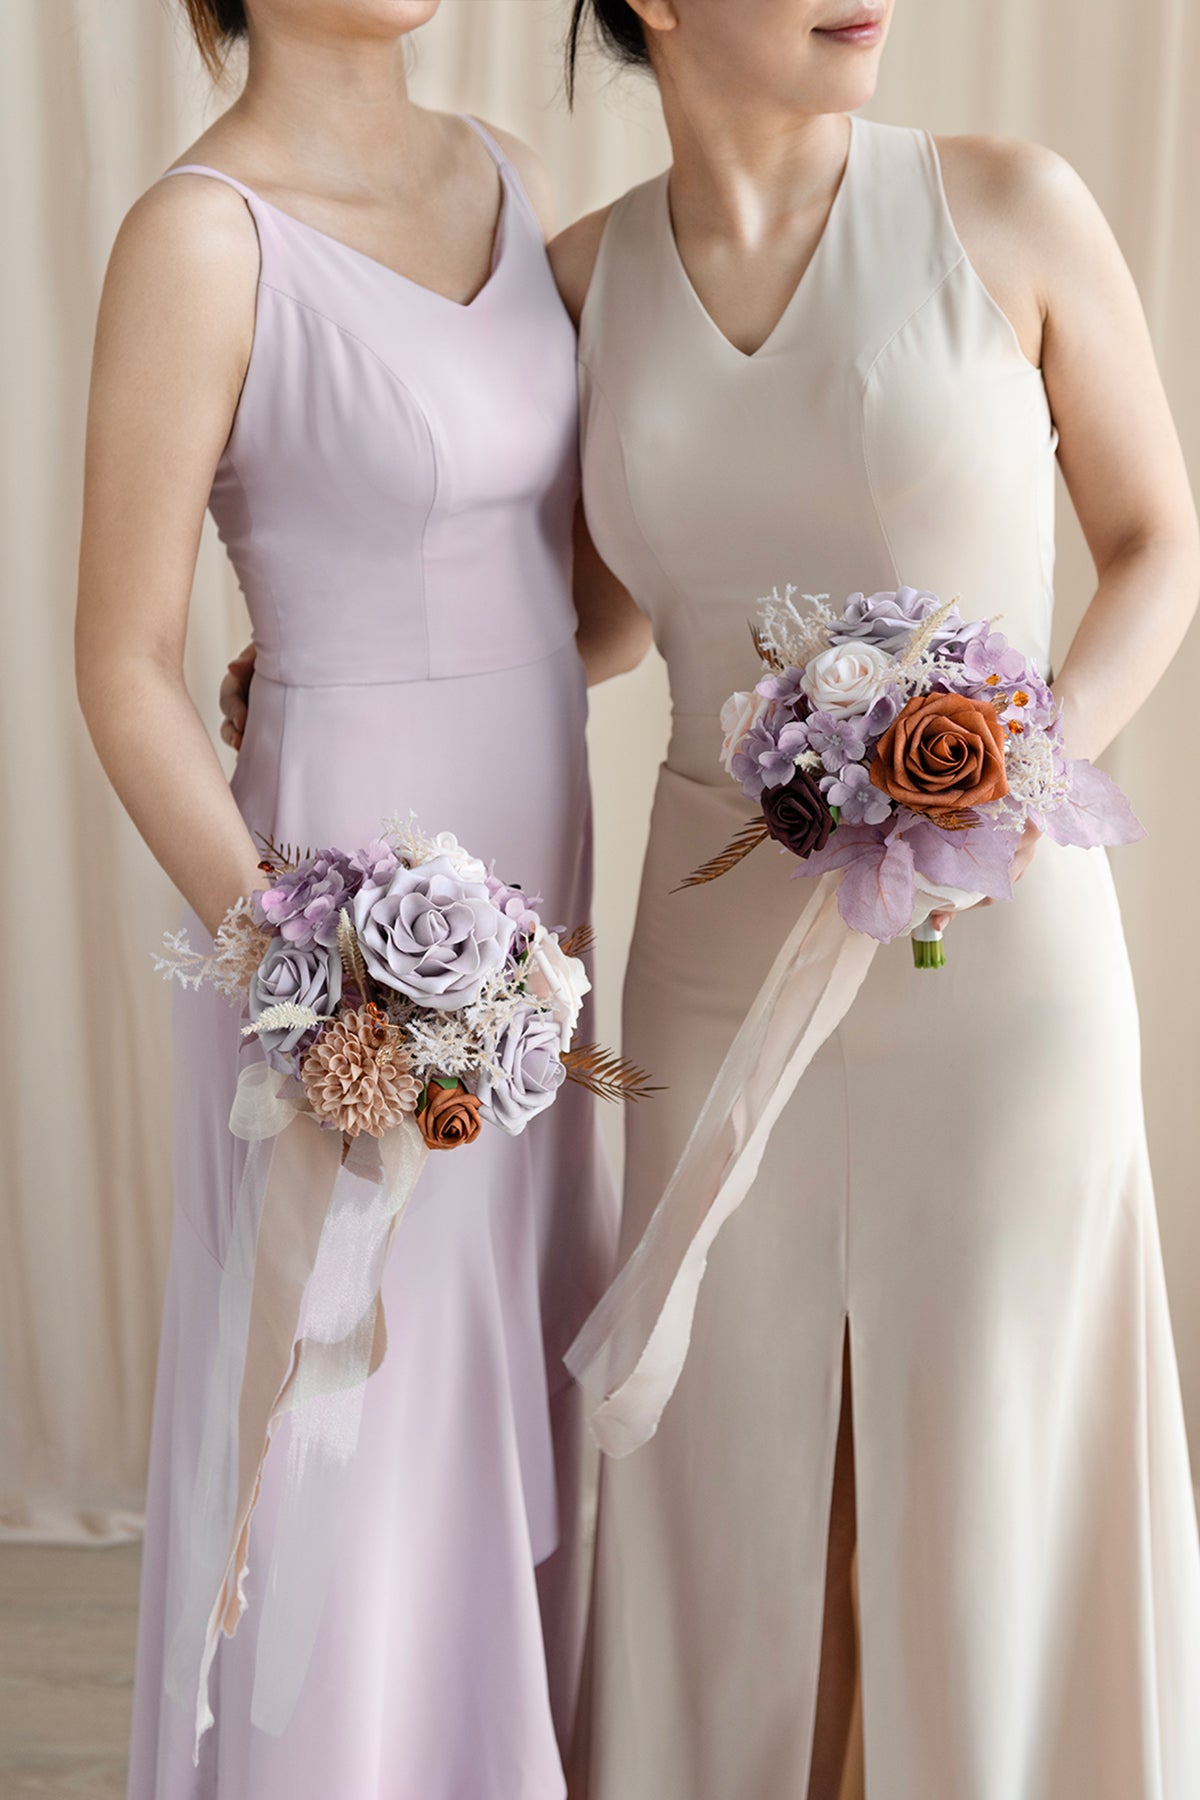 Round Bridesmaid Bouquets in Lavender Aster & Burnt Orange